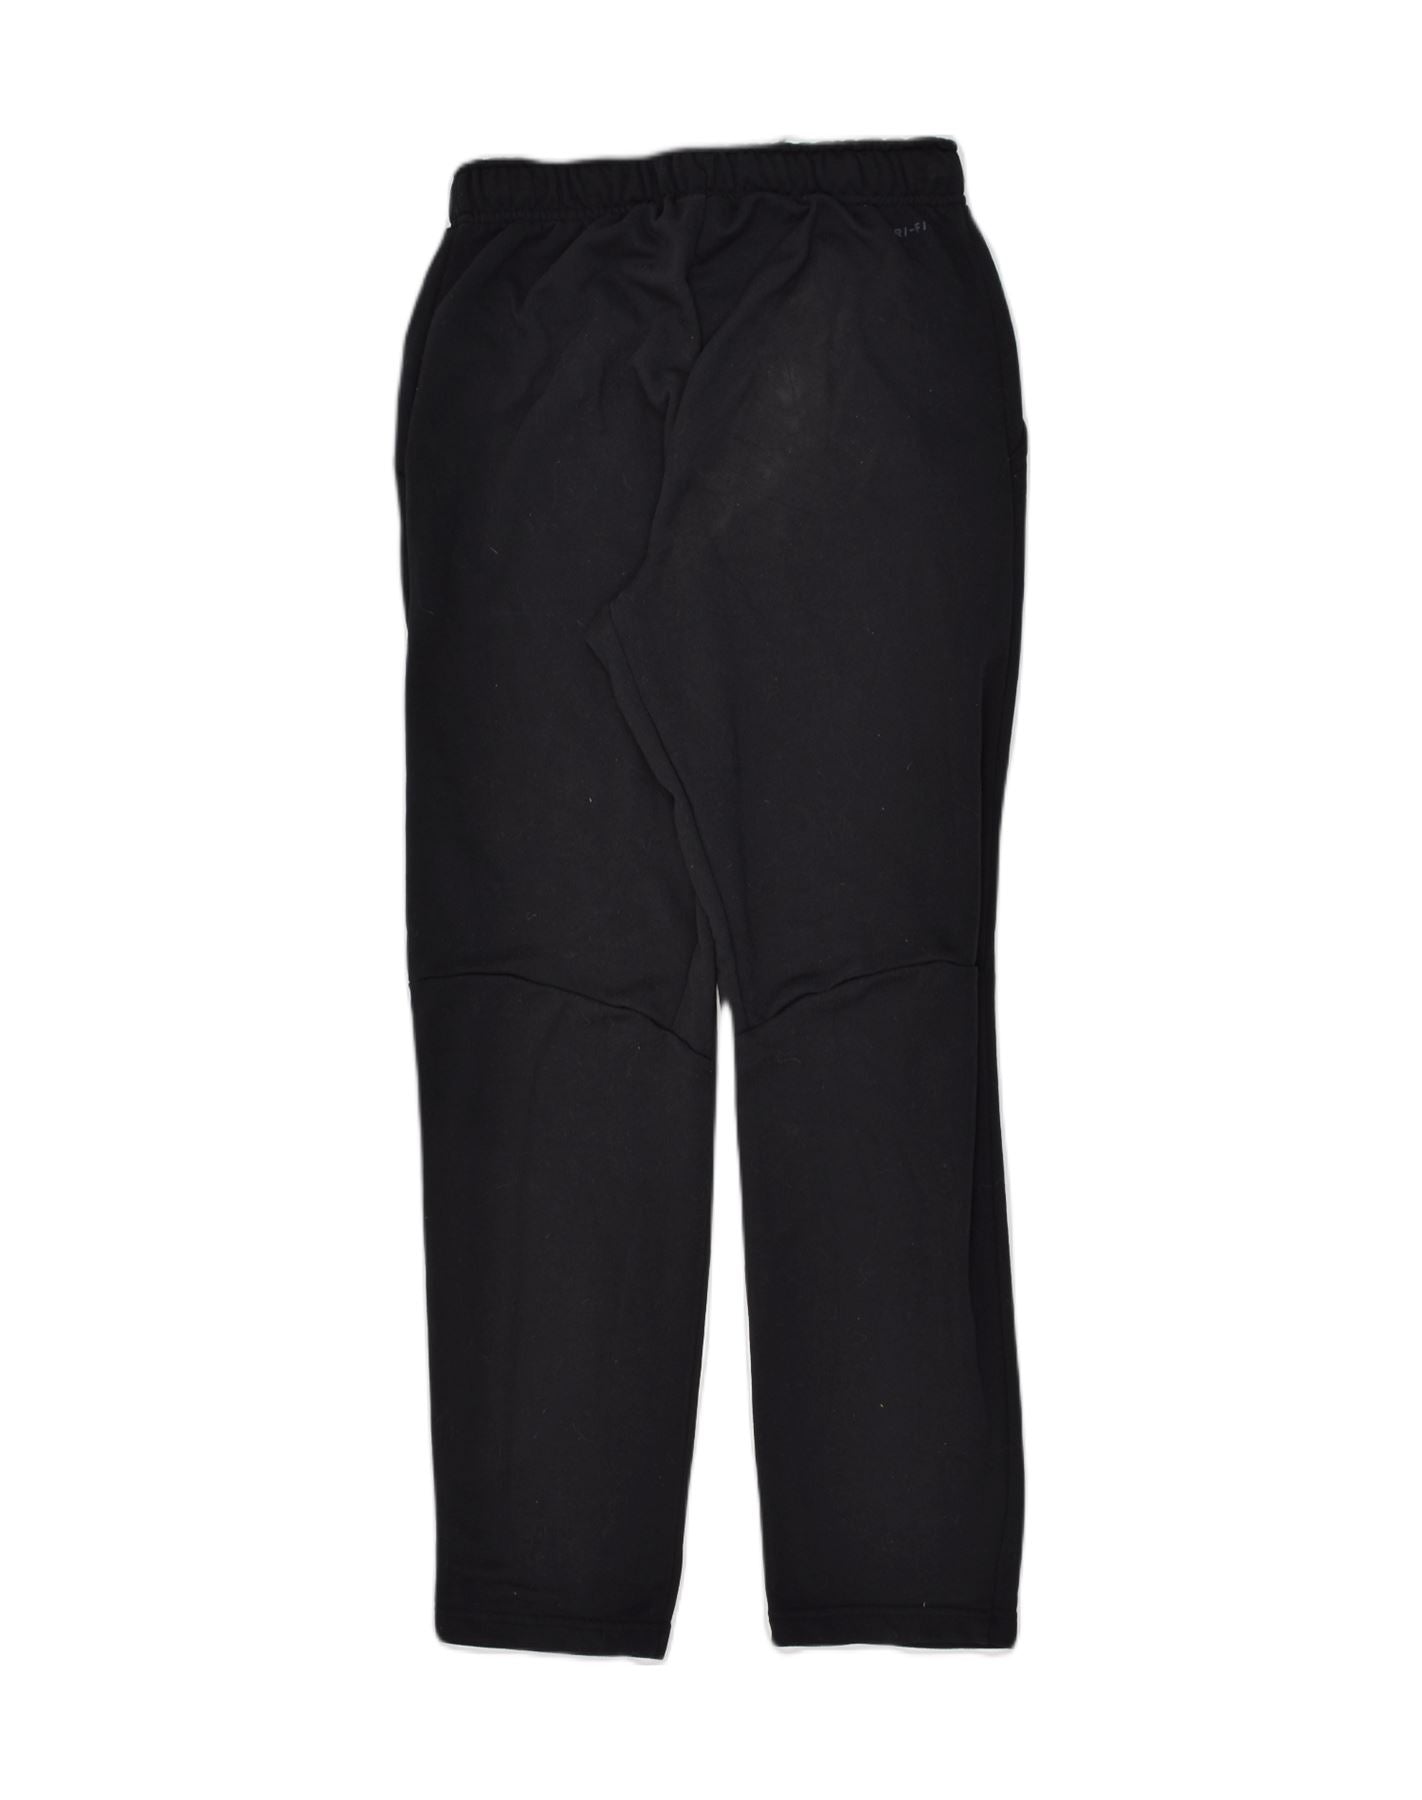 NIKE Womens Dri Fit Tracksuit Trousers UK 10 Small Black Polyester